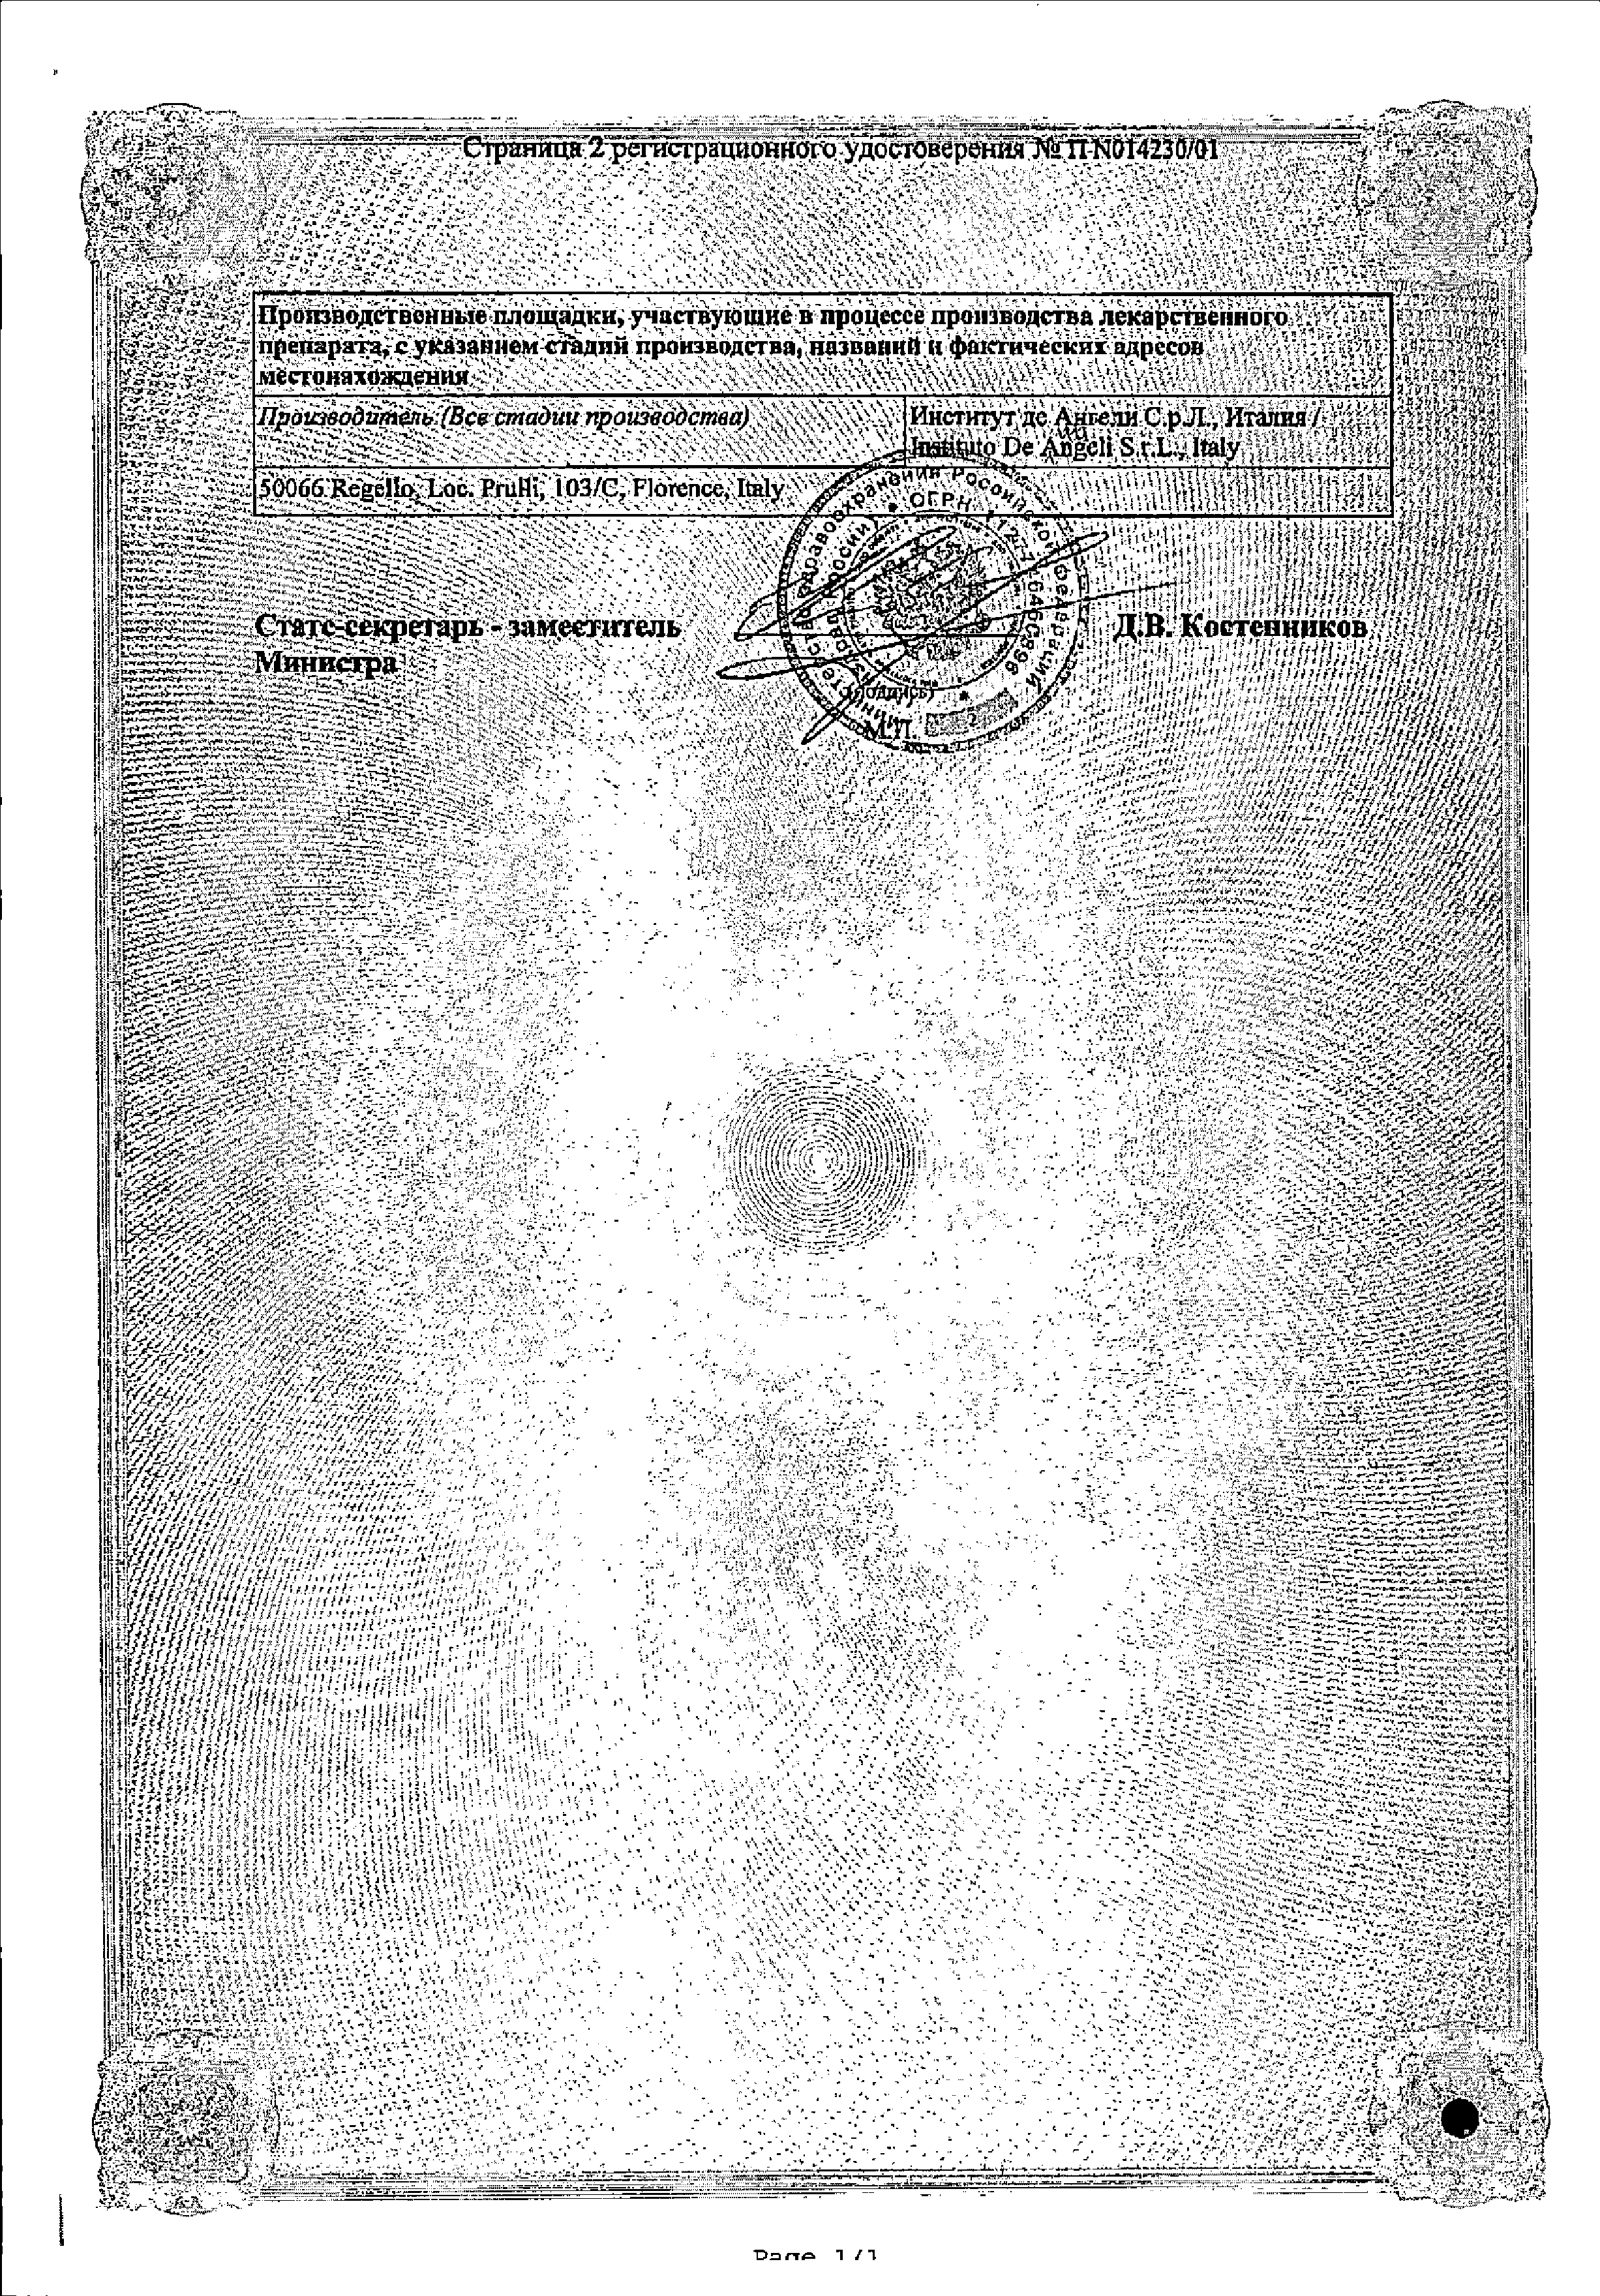 Гутталакс Экспресс сертификат